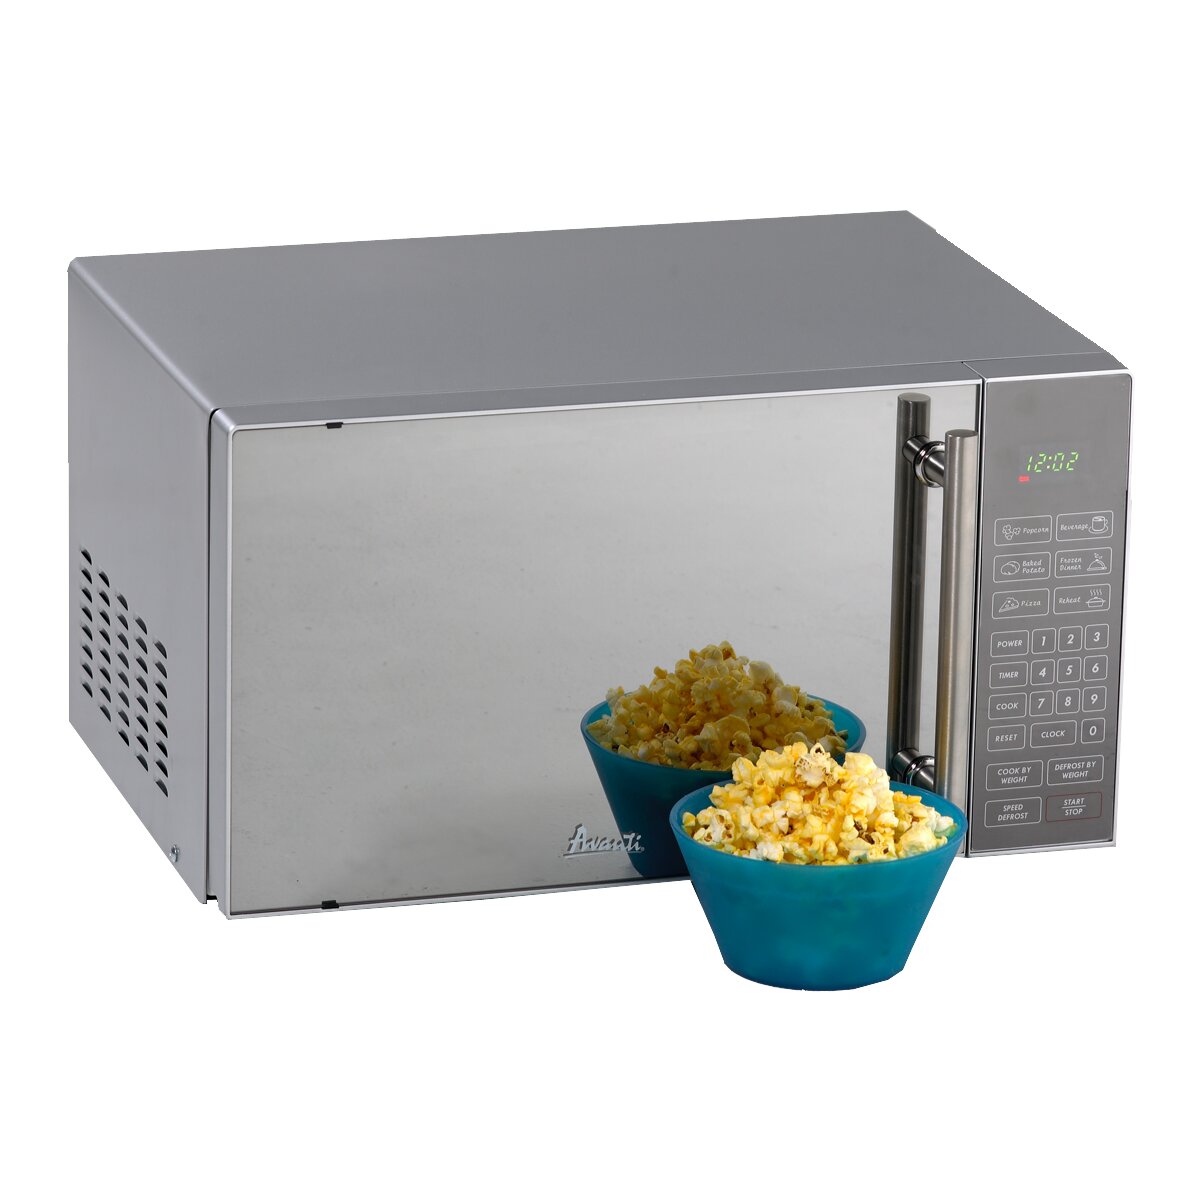 Avanti 0.8 Cu. Ft. 700W Countertop Microwave & Reviews | Wayfair